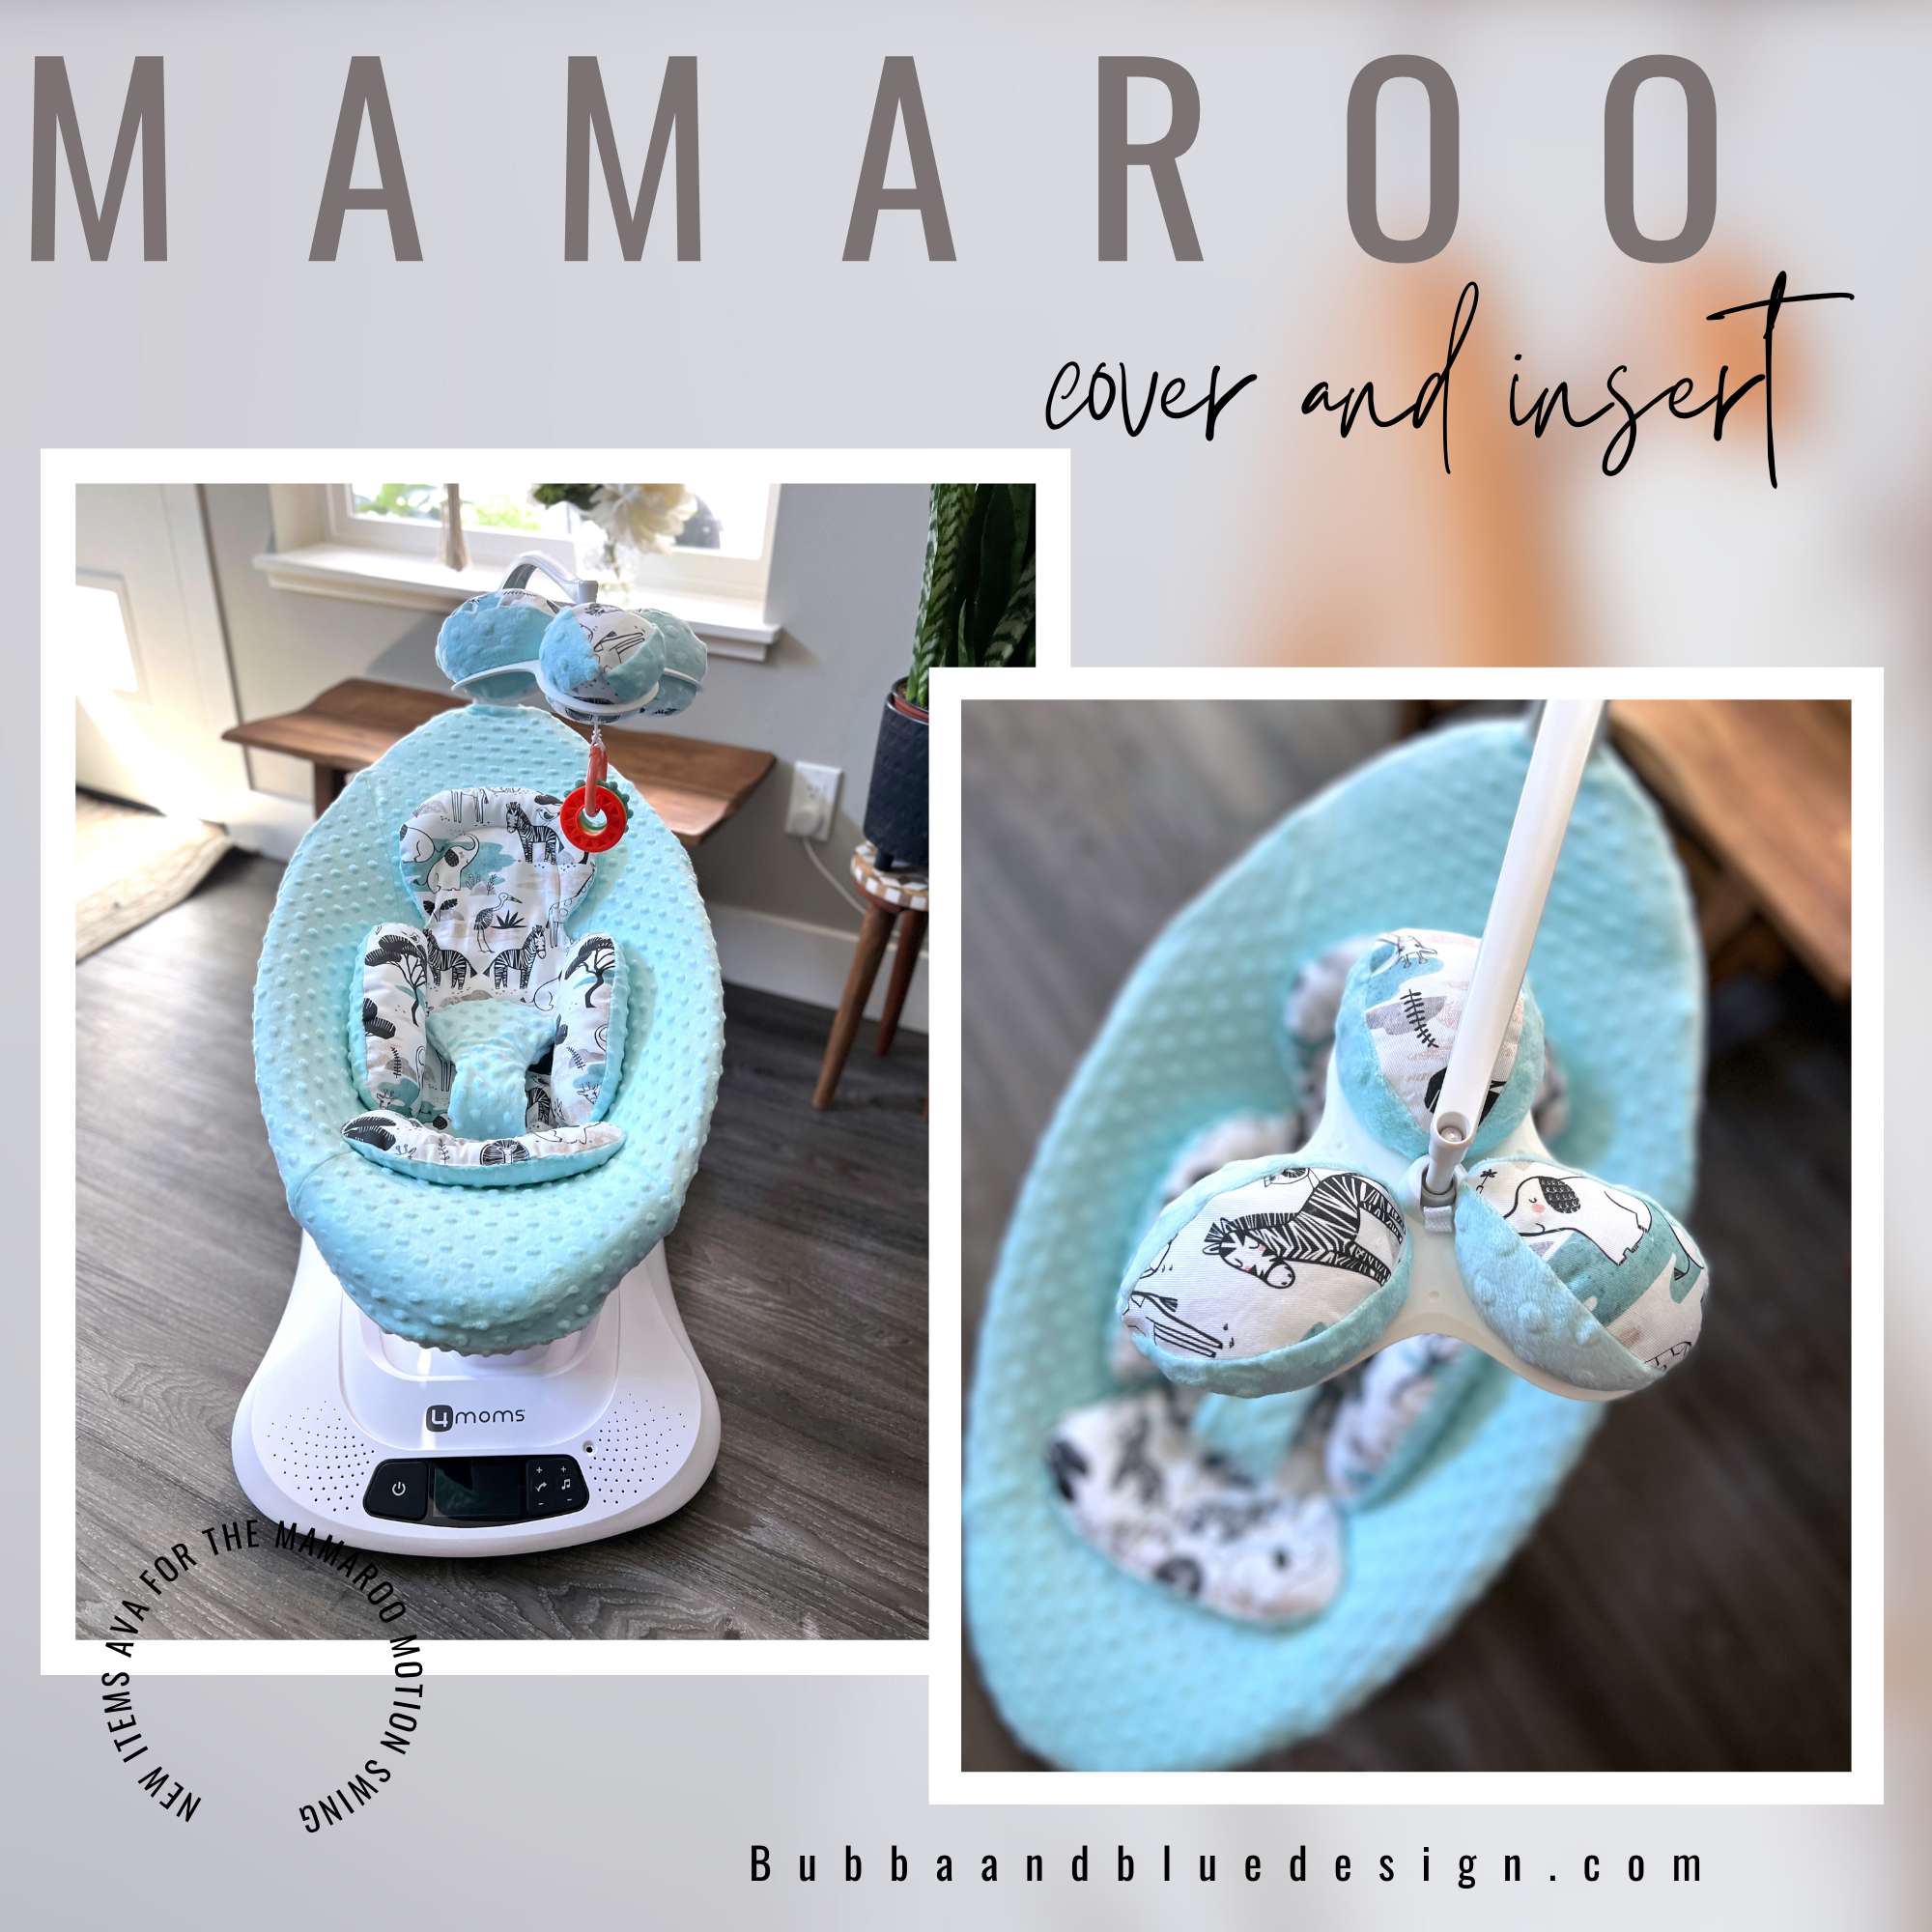 Mamaroo seat cover, newborn insert and balls in aqua safari animal